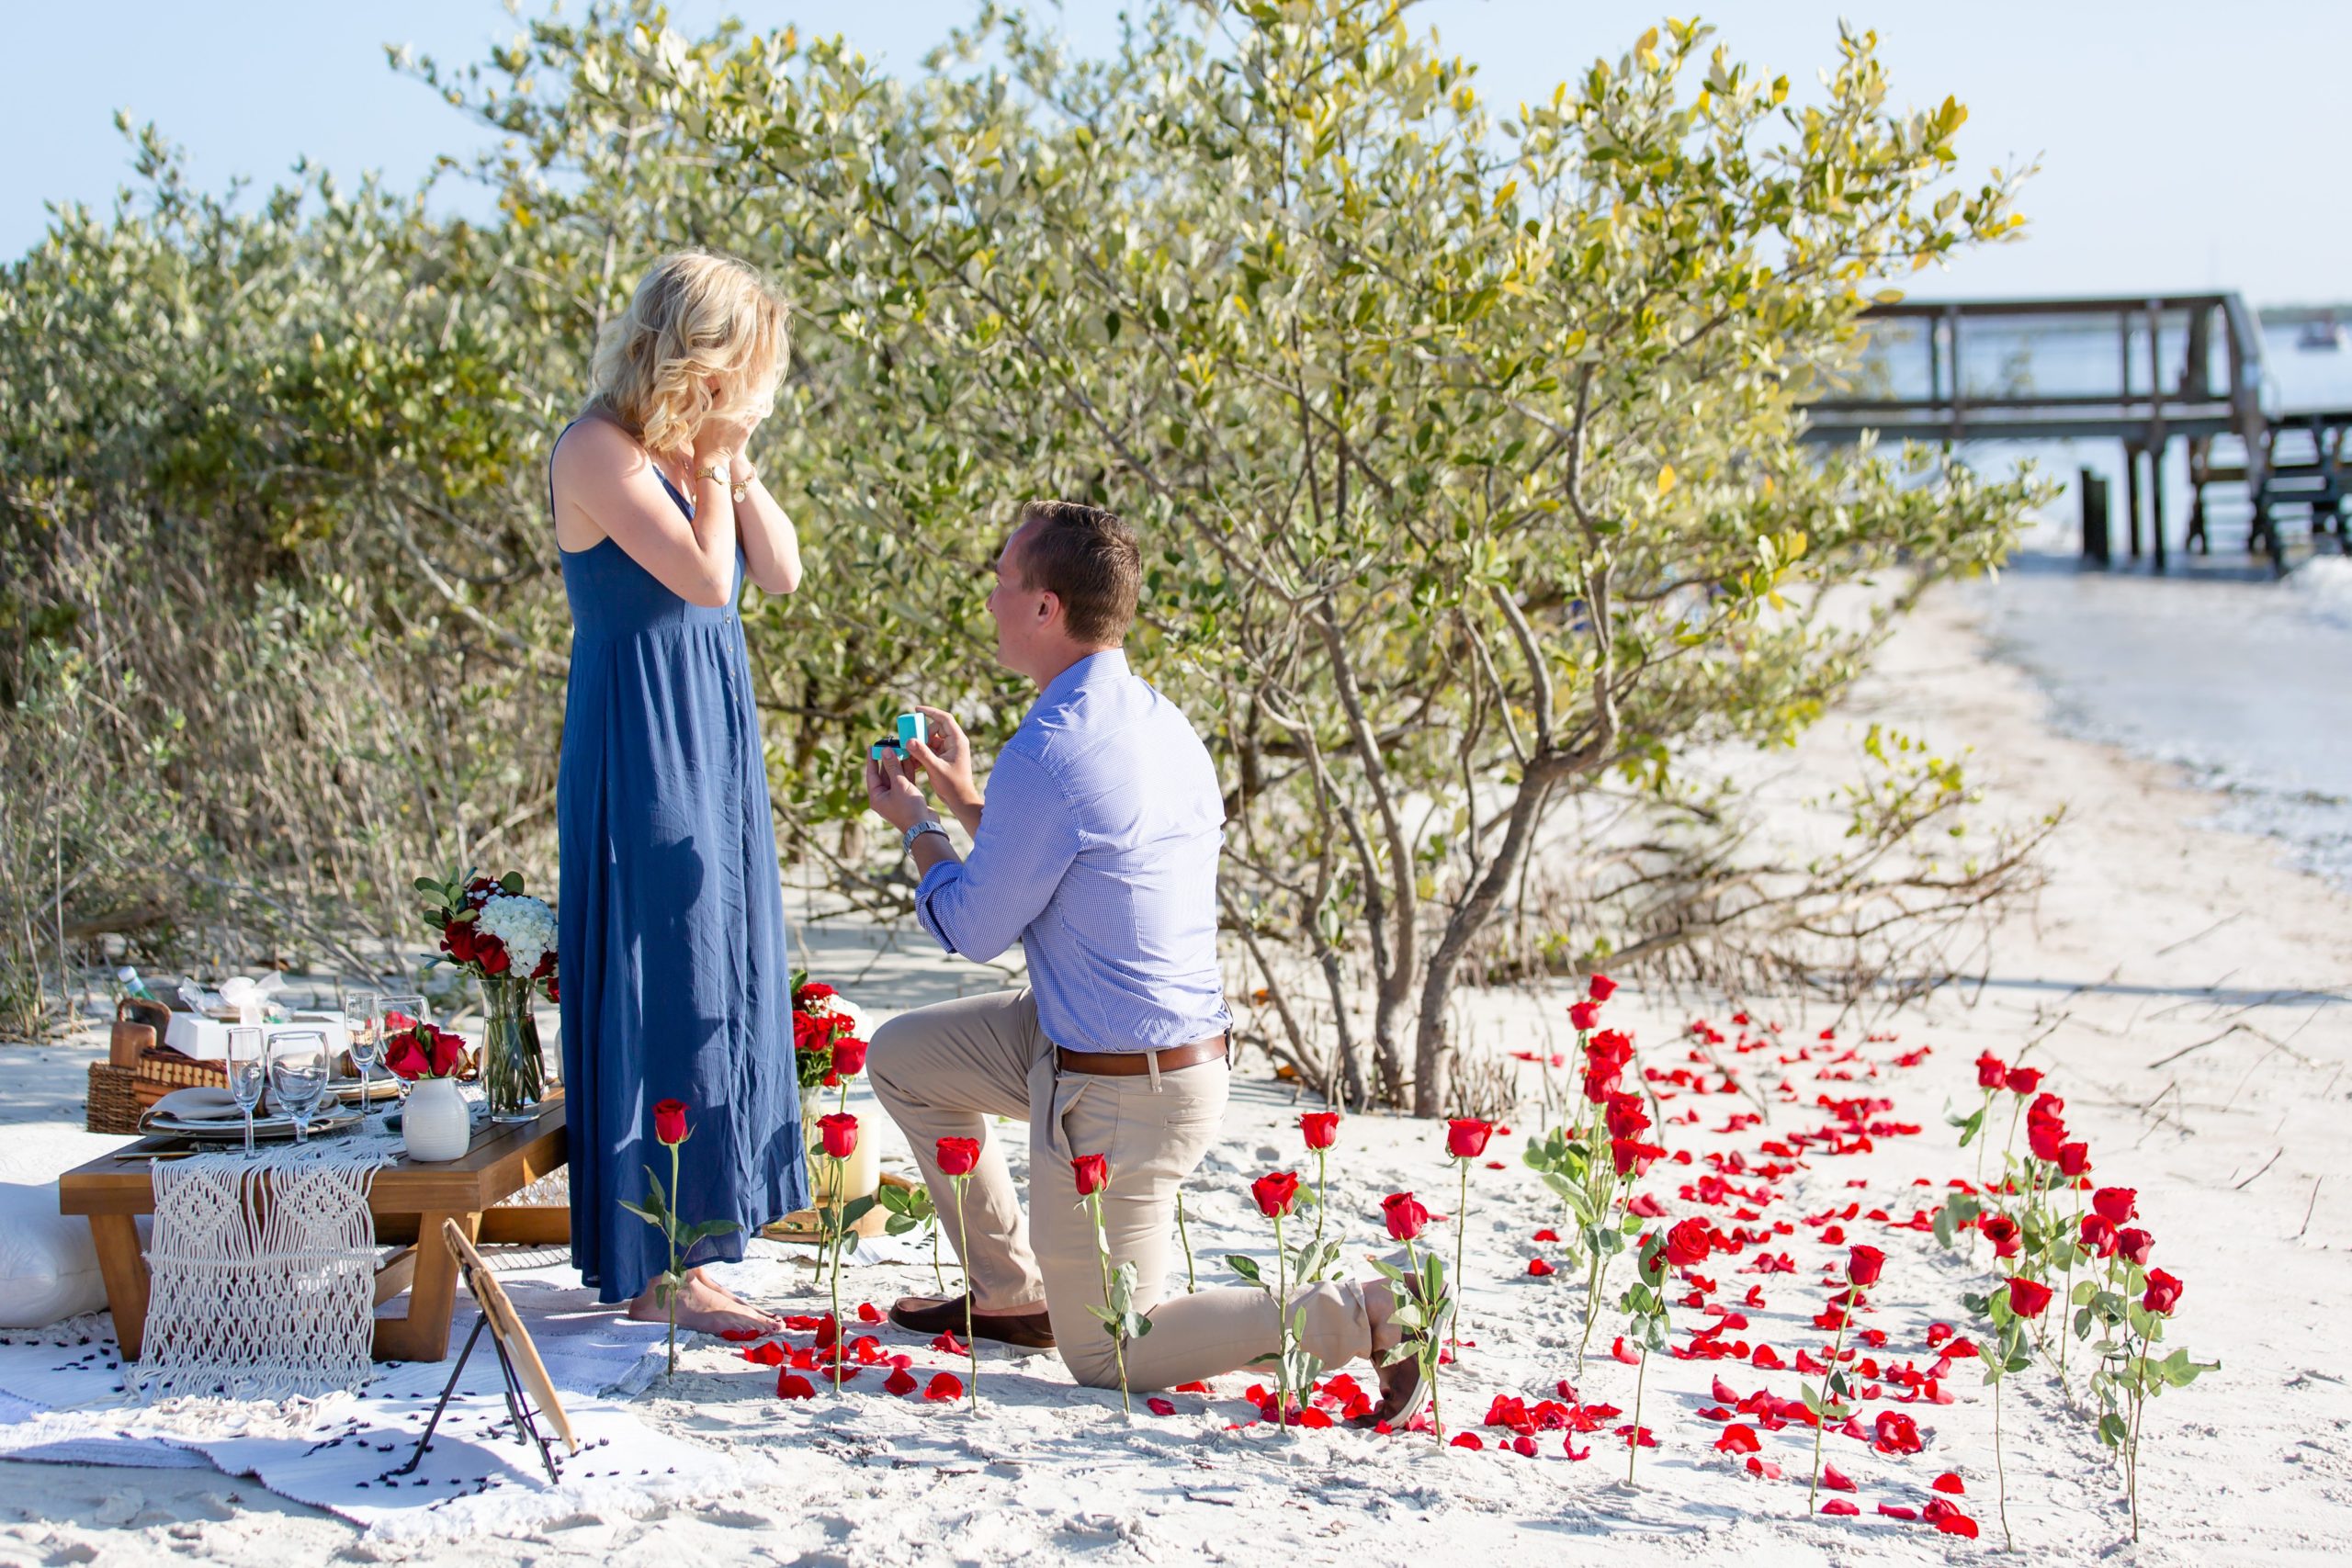 Florida Beach Proposal Photos - New Smyrna Dunes Park Proposal — Surprise Beach proposal with pop up picnic and rose petals on the beach